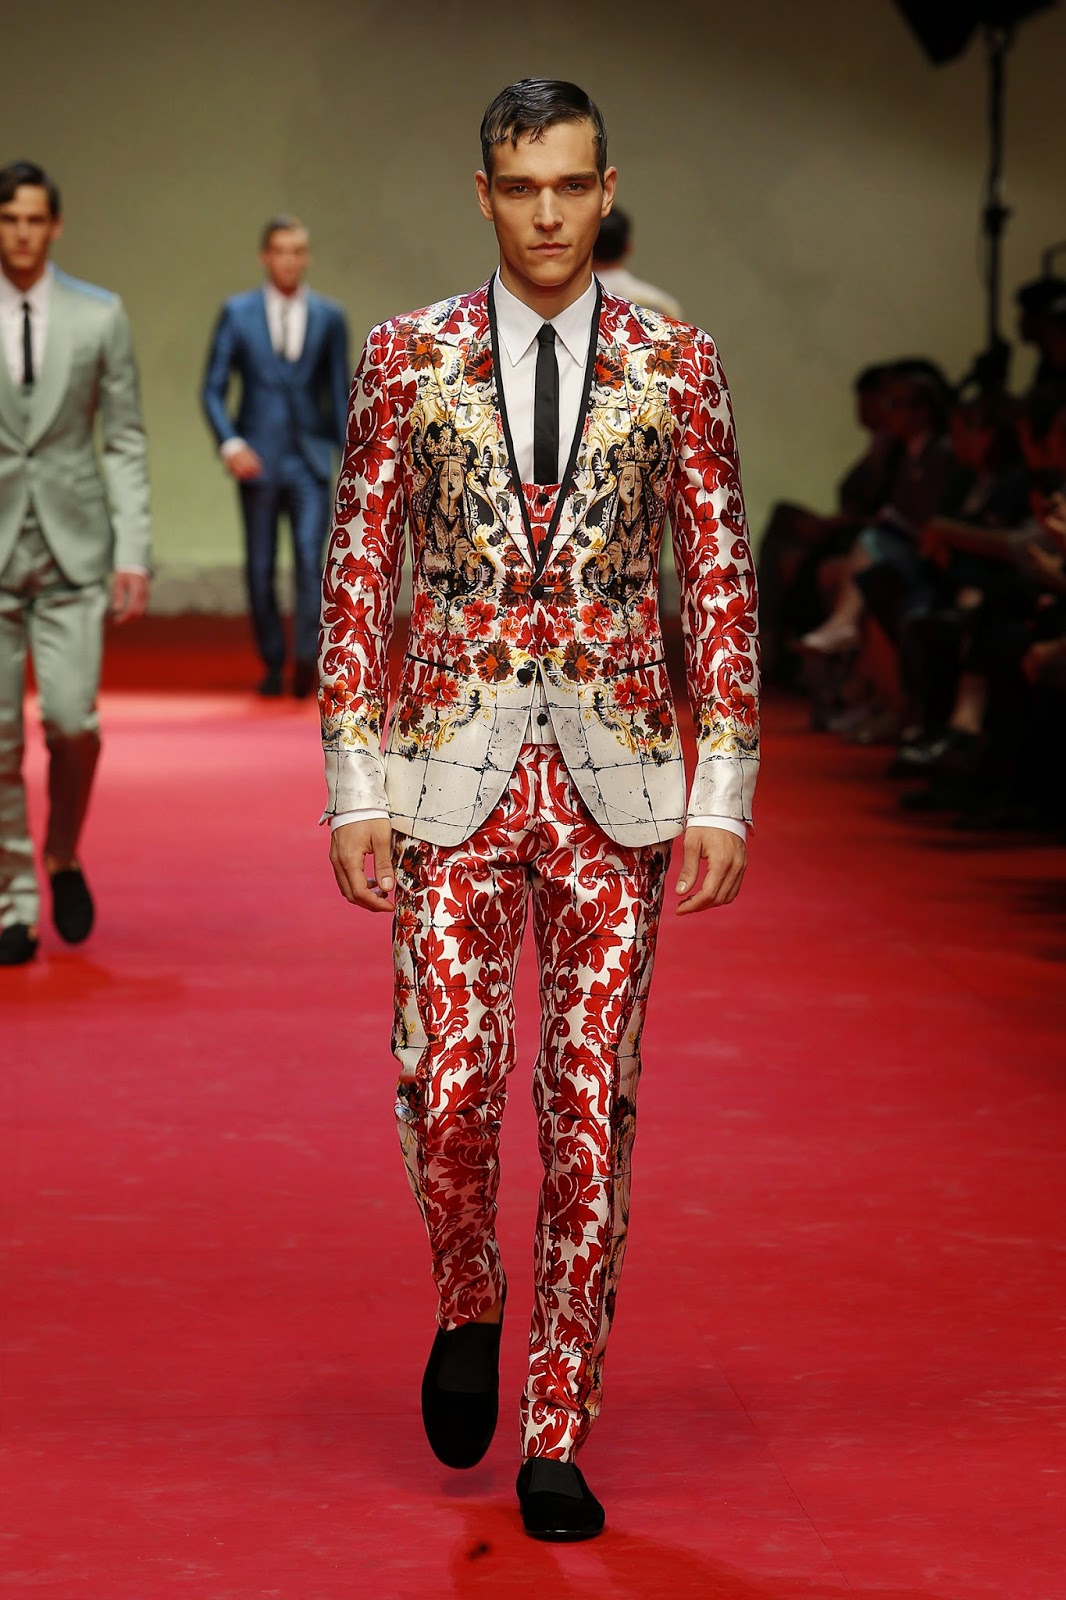 Fashion Runway | Dolce&Gabbana SS15 | COOL CHIC STYLE to dress italian